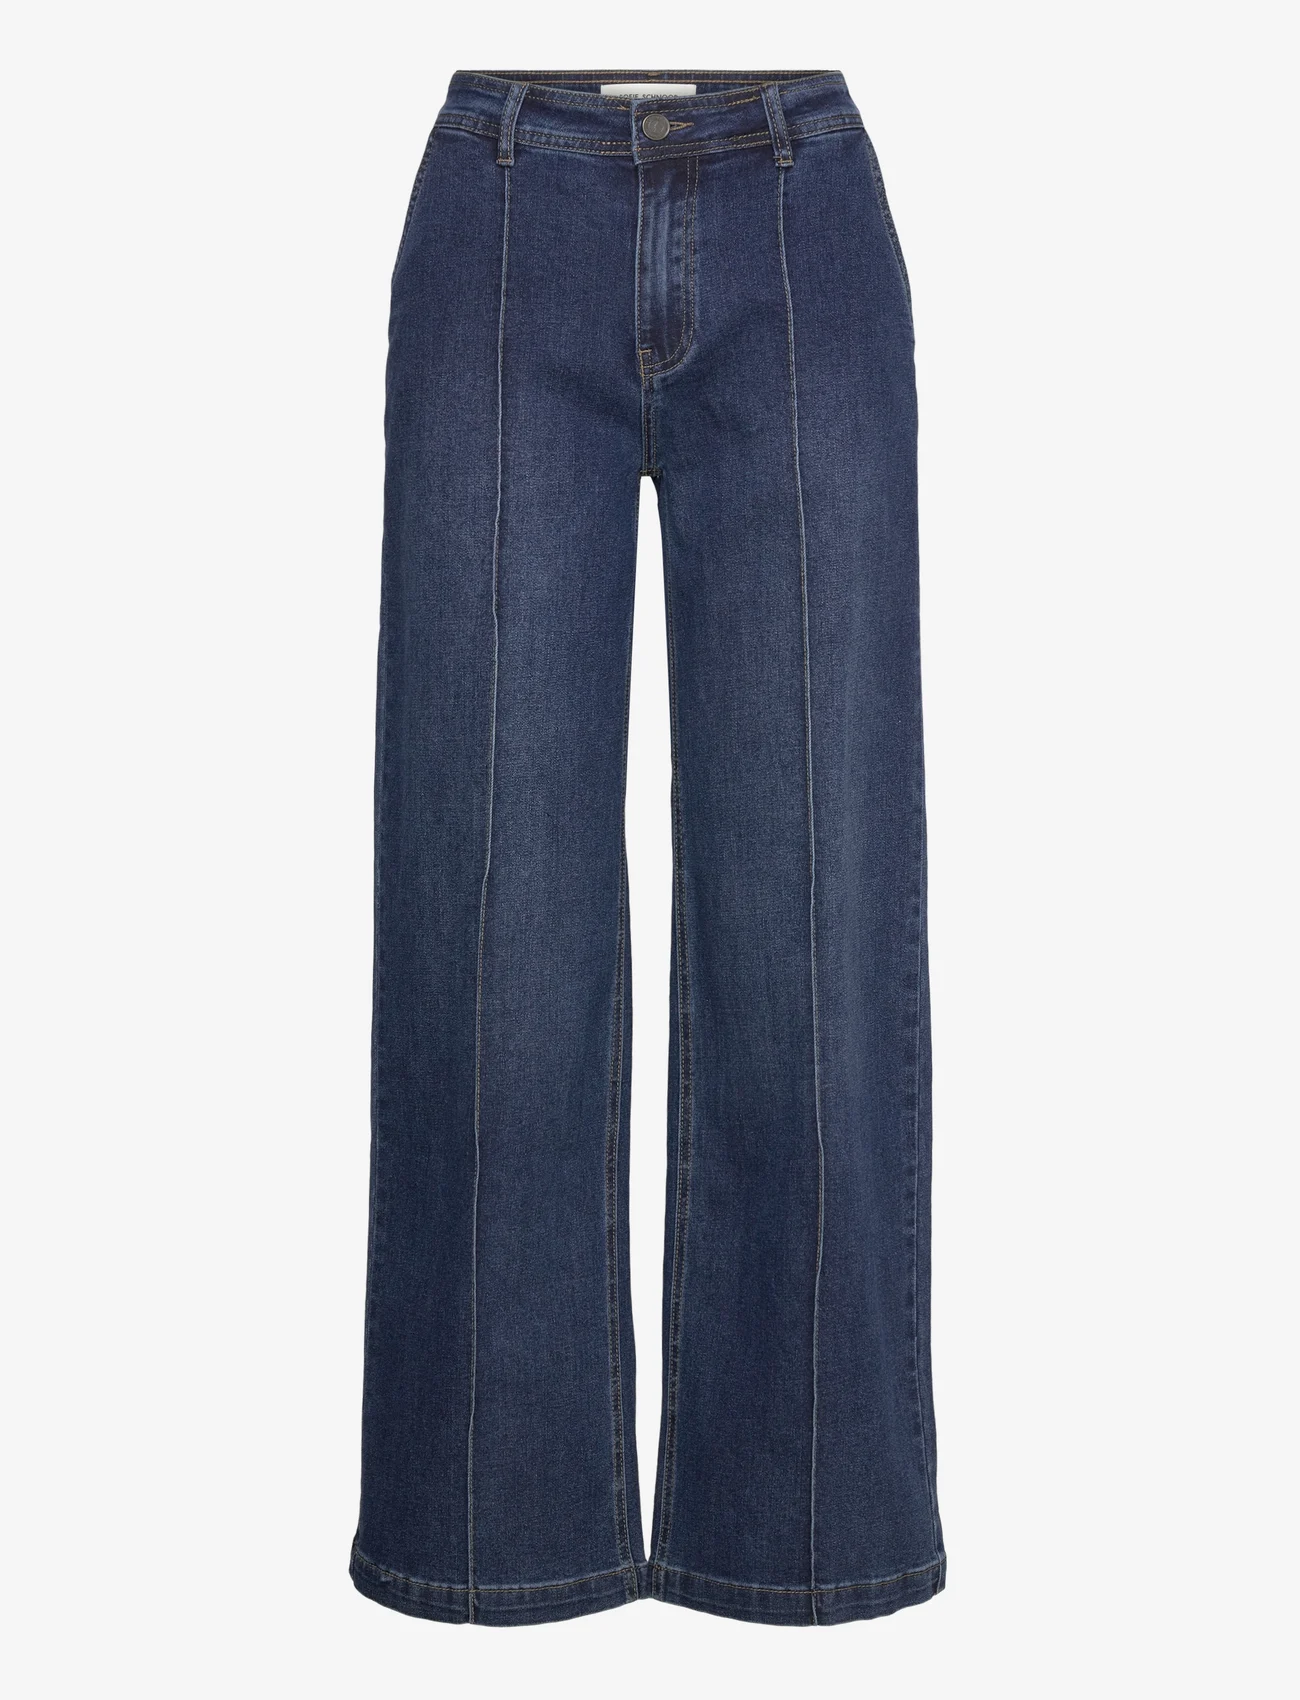 Sofie Schnoor - Jeans - bukser med brede ben - dark denim blue - 0